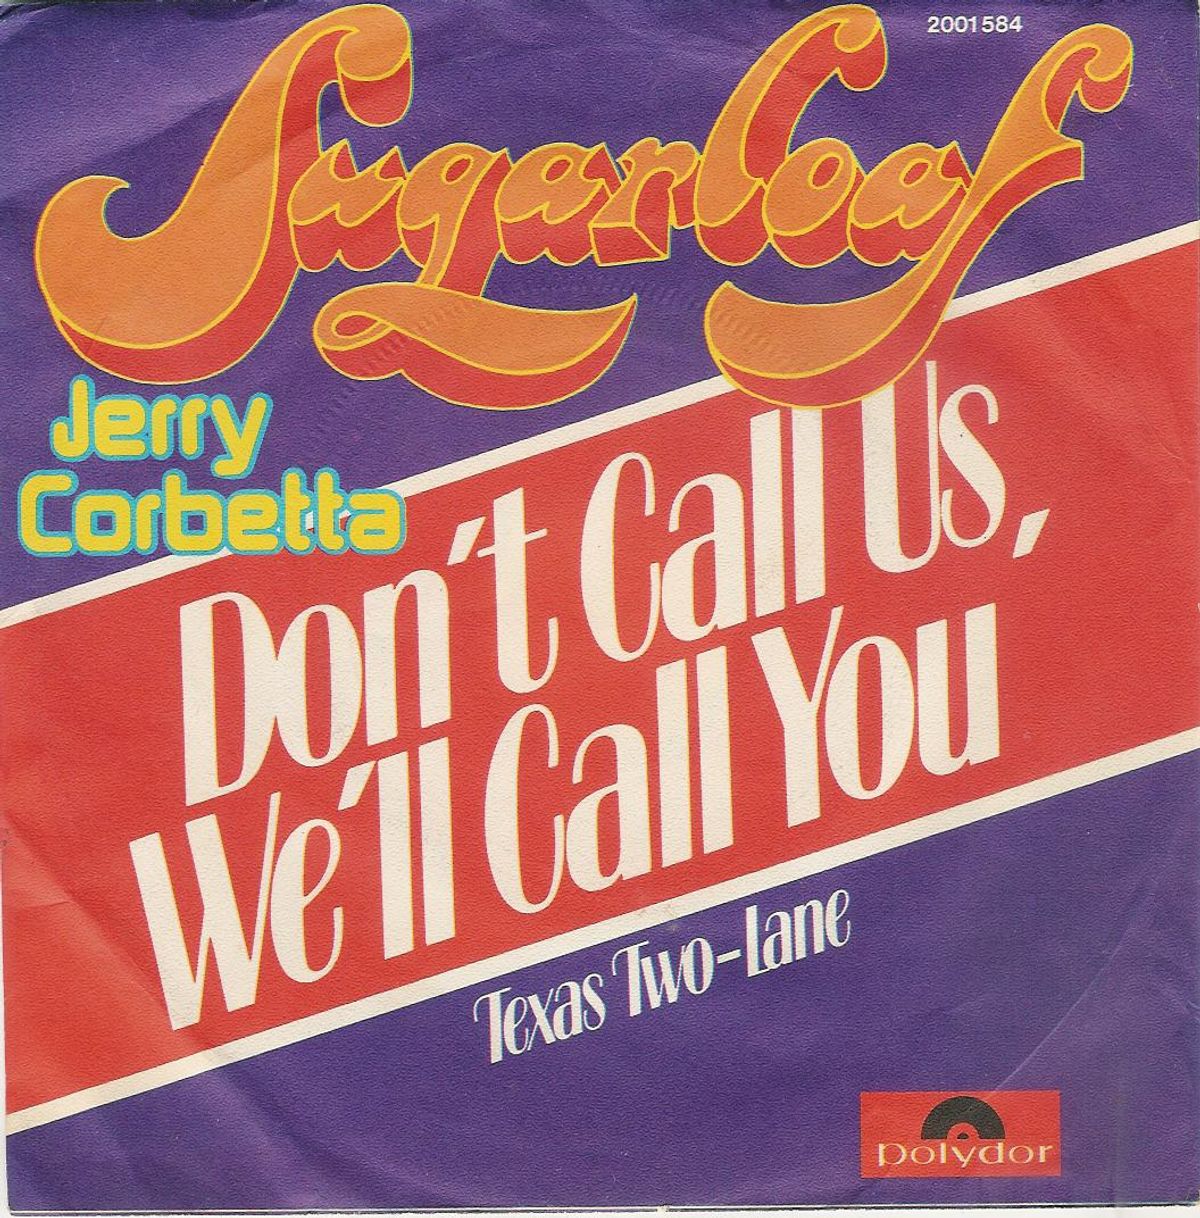 #ETPhoneHome - Sugarloaf - Don’t Call Us, We'll Call You (1975)